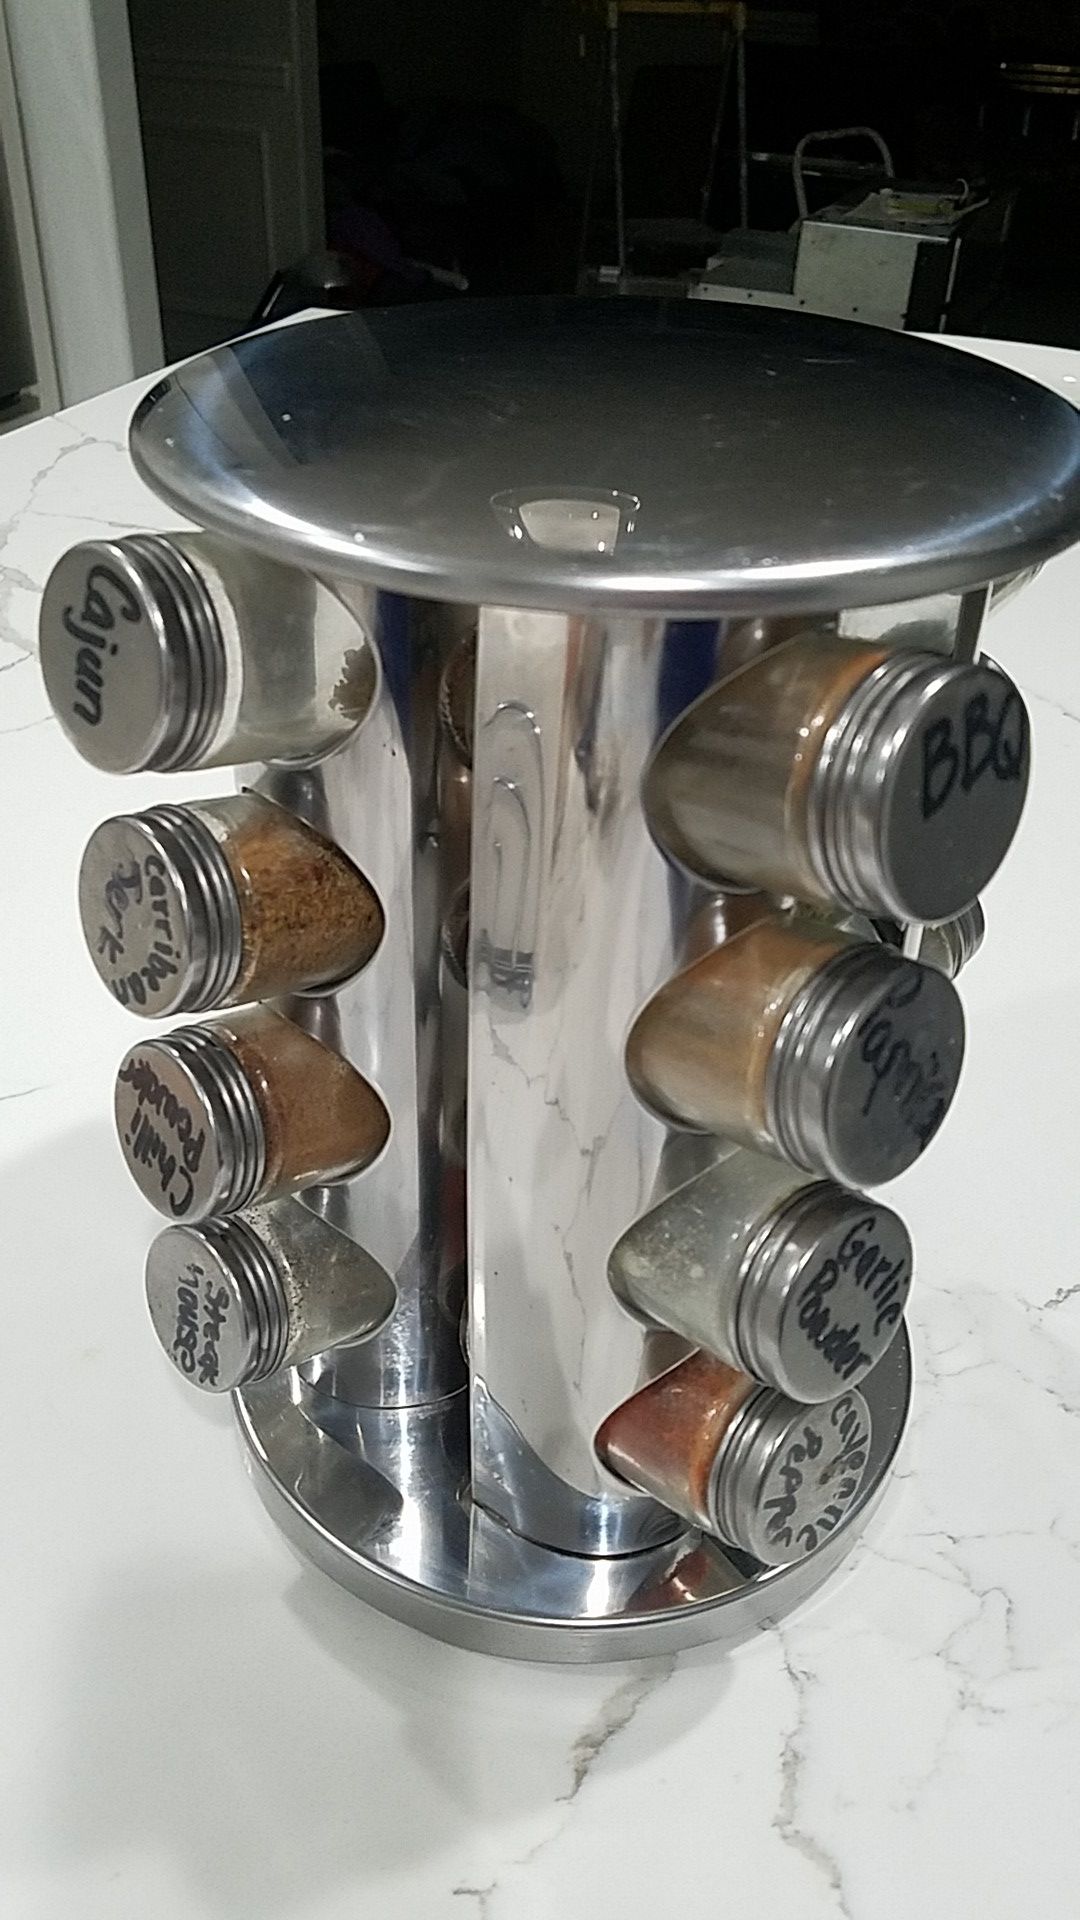 Spice rack with 16 jars